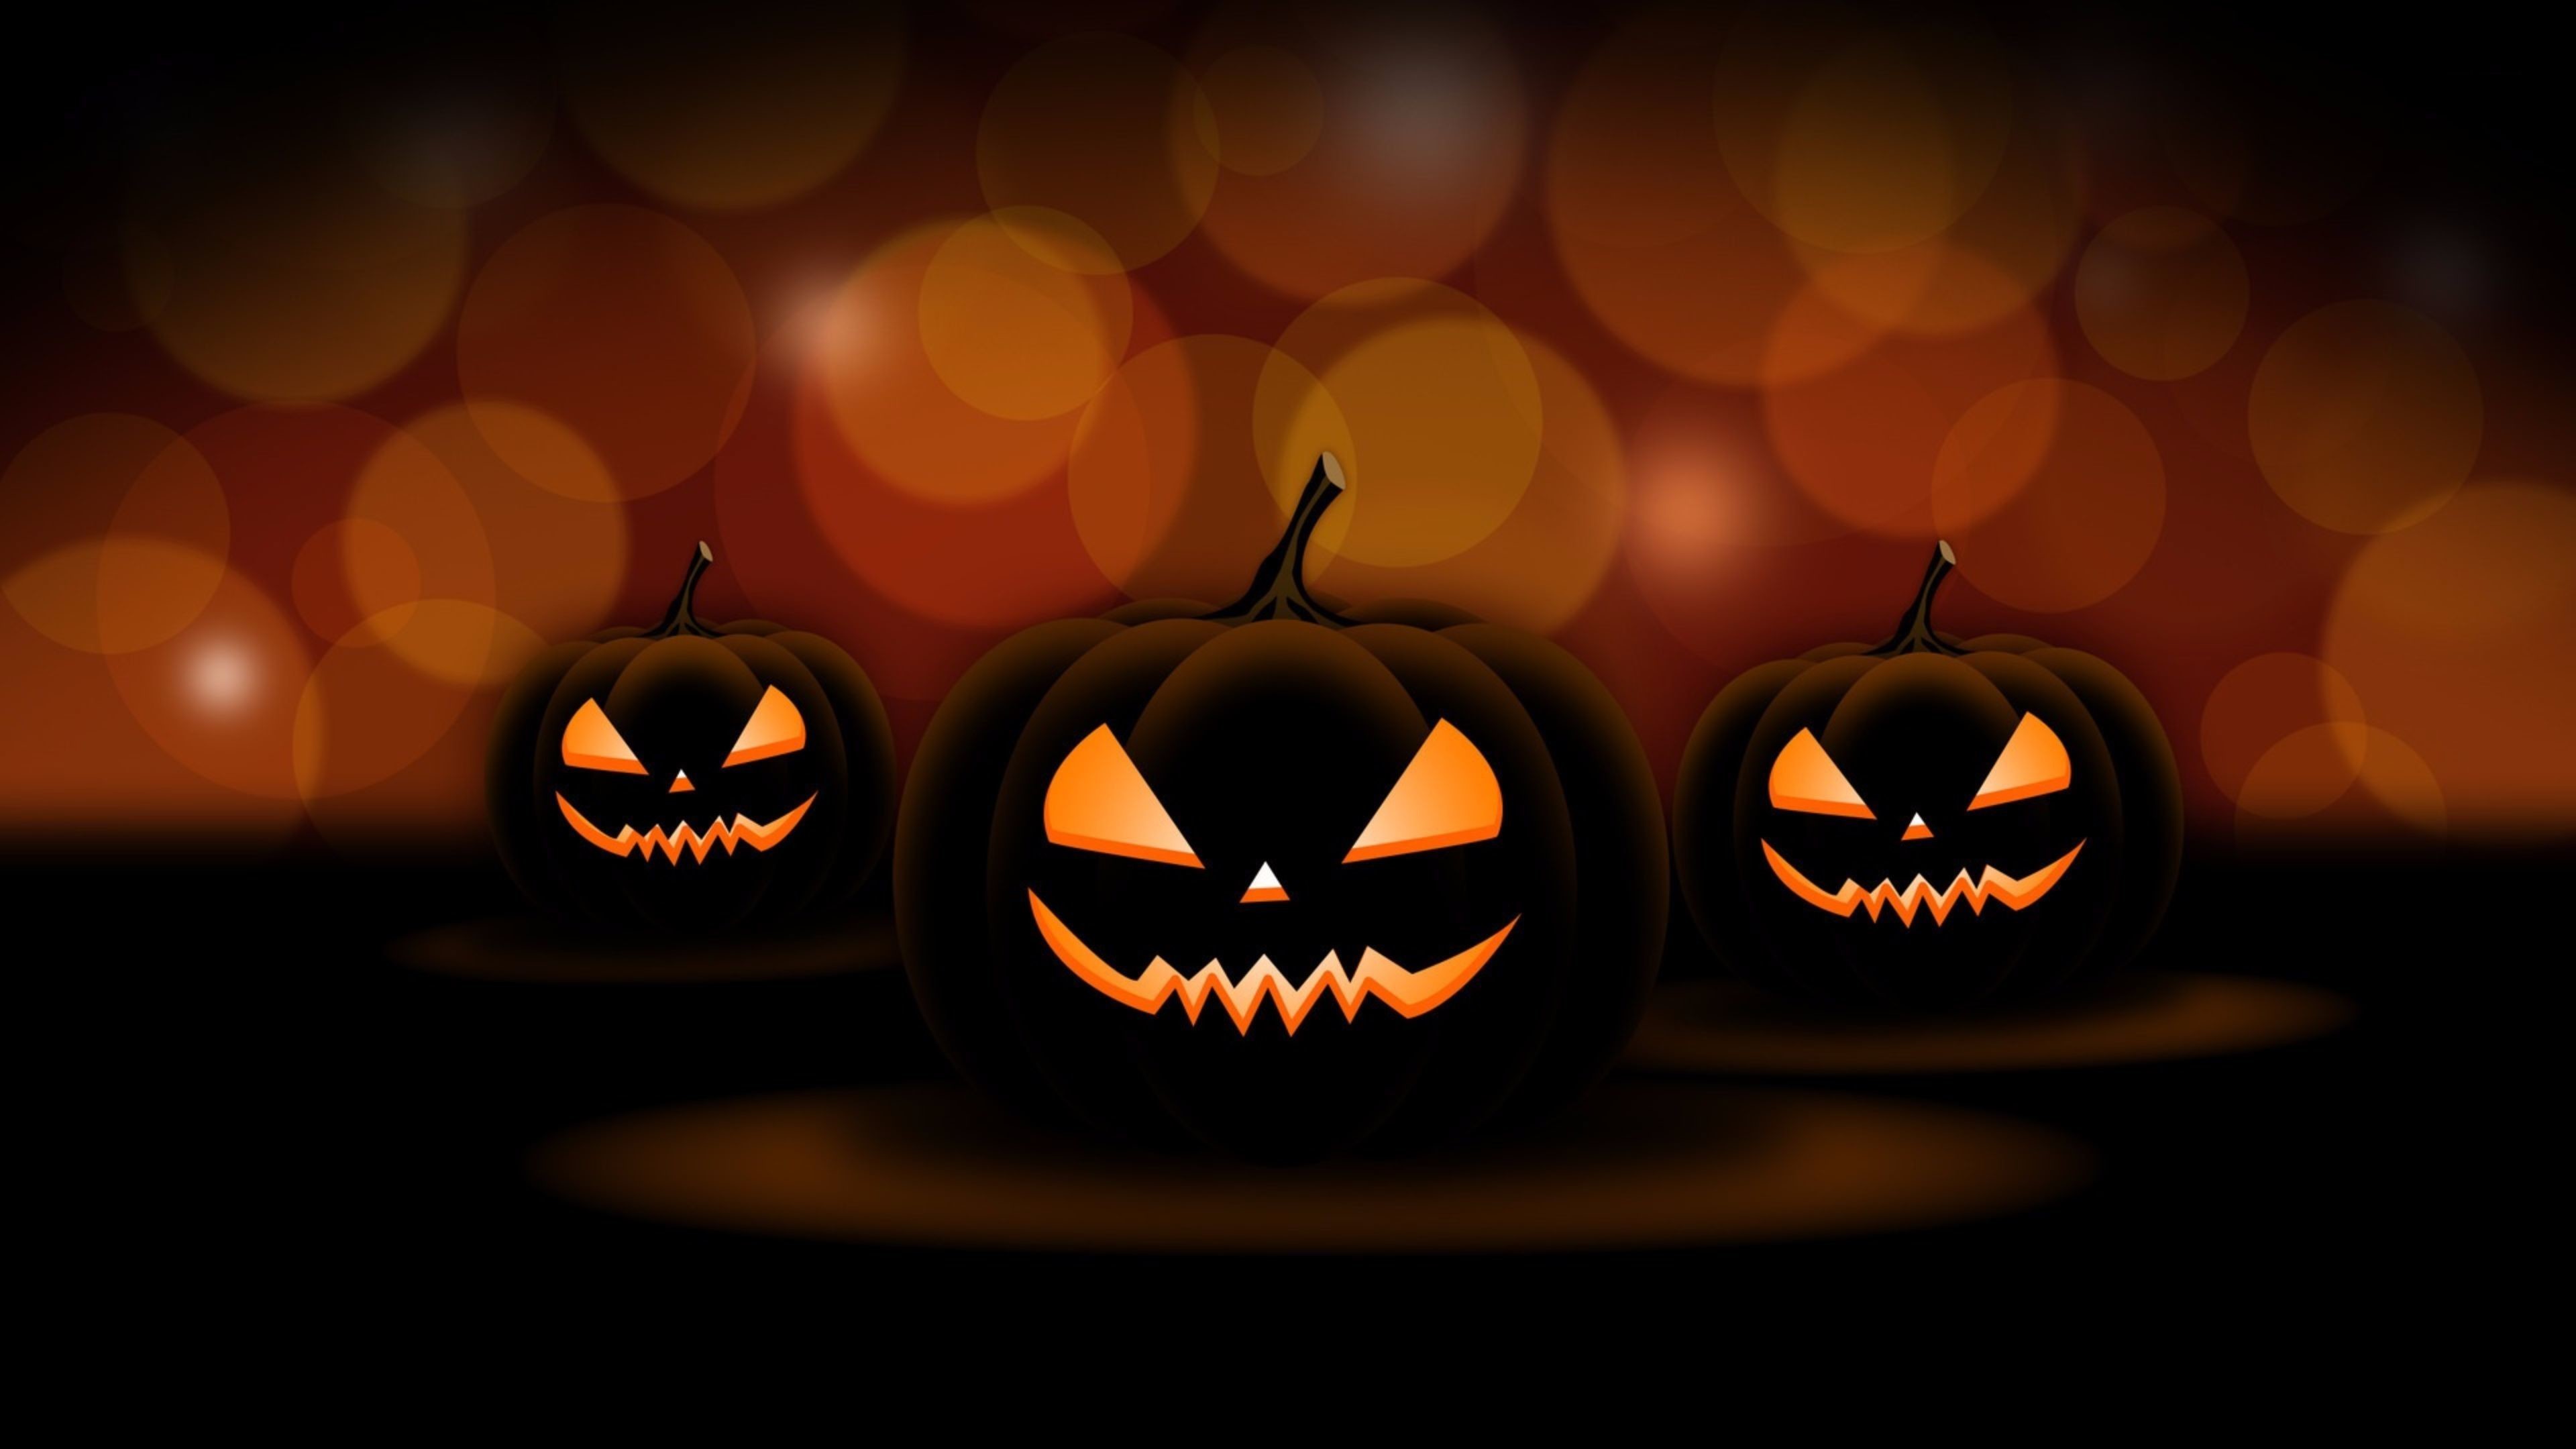 3840x2160 1280x720 Halloween Terror Animated Wallpaper http://www.desktopanimated.com  ...">